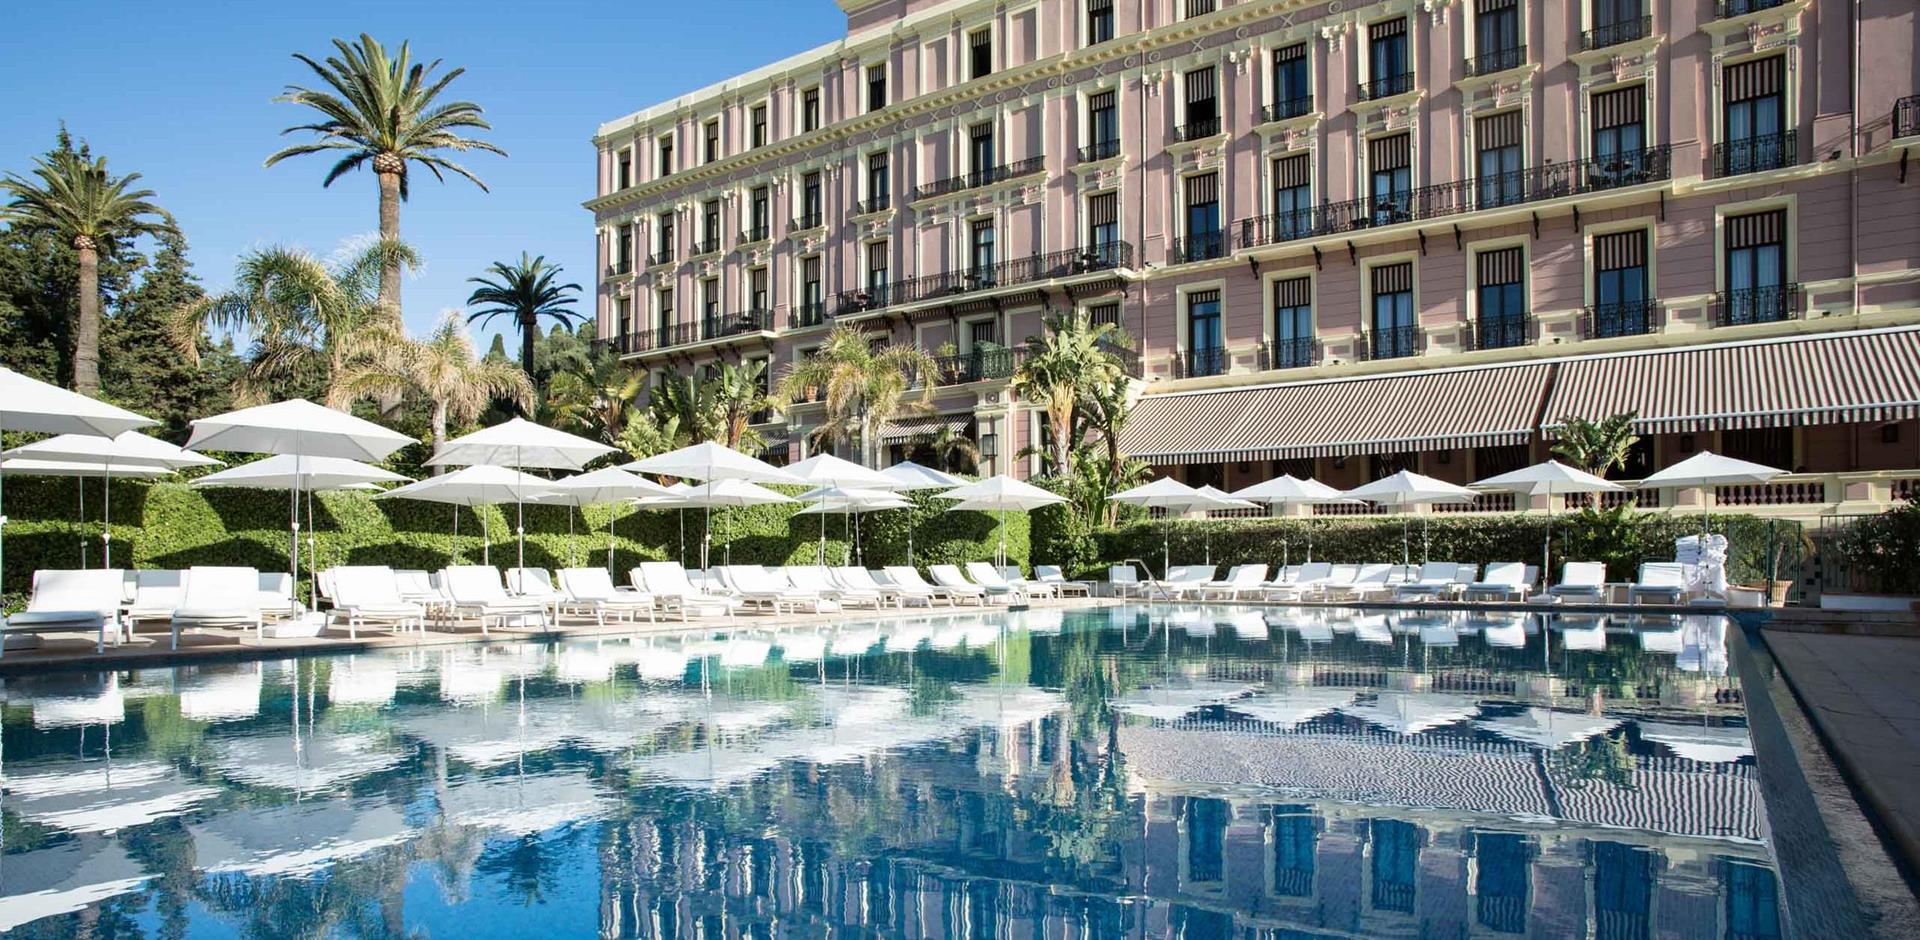 Hotel Royal Riviera, CÔTE D'AZUR, A&K